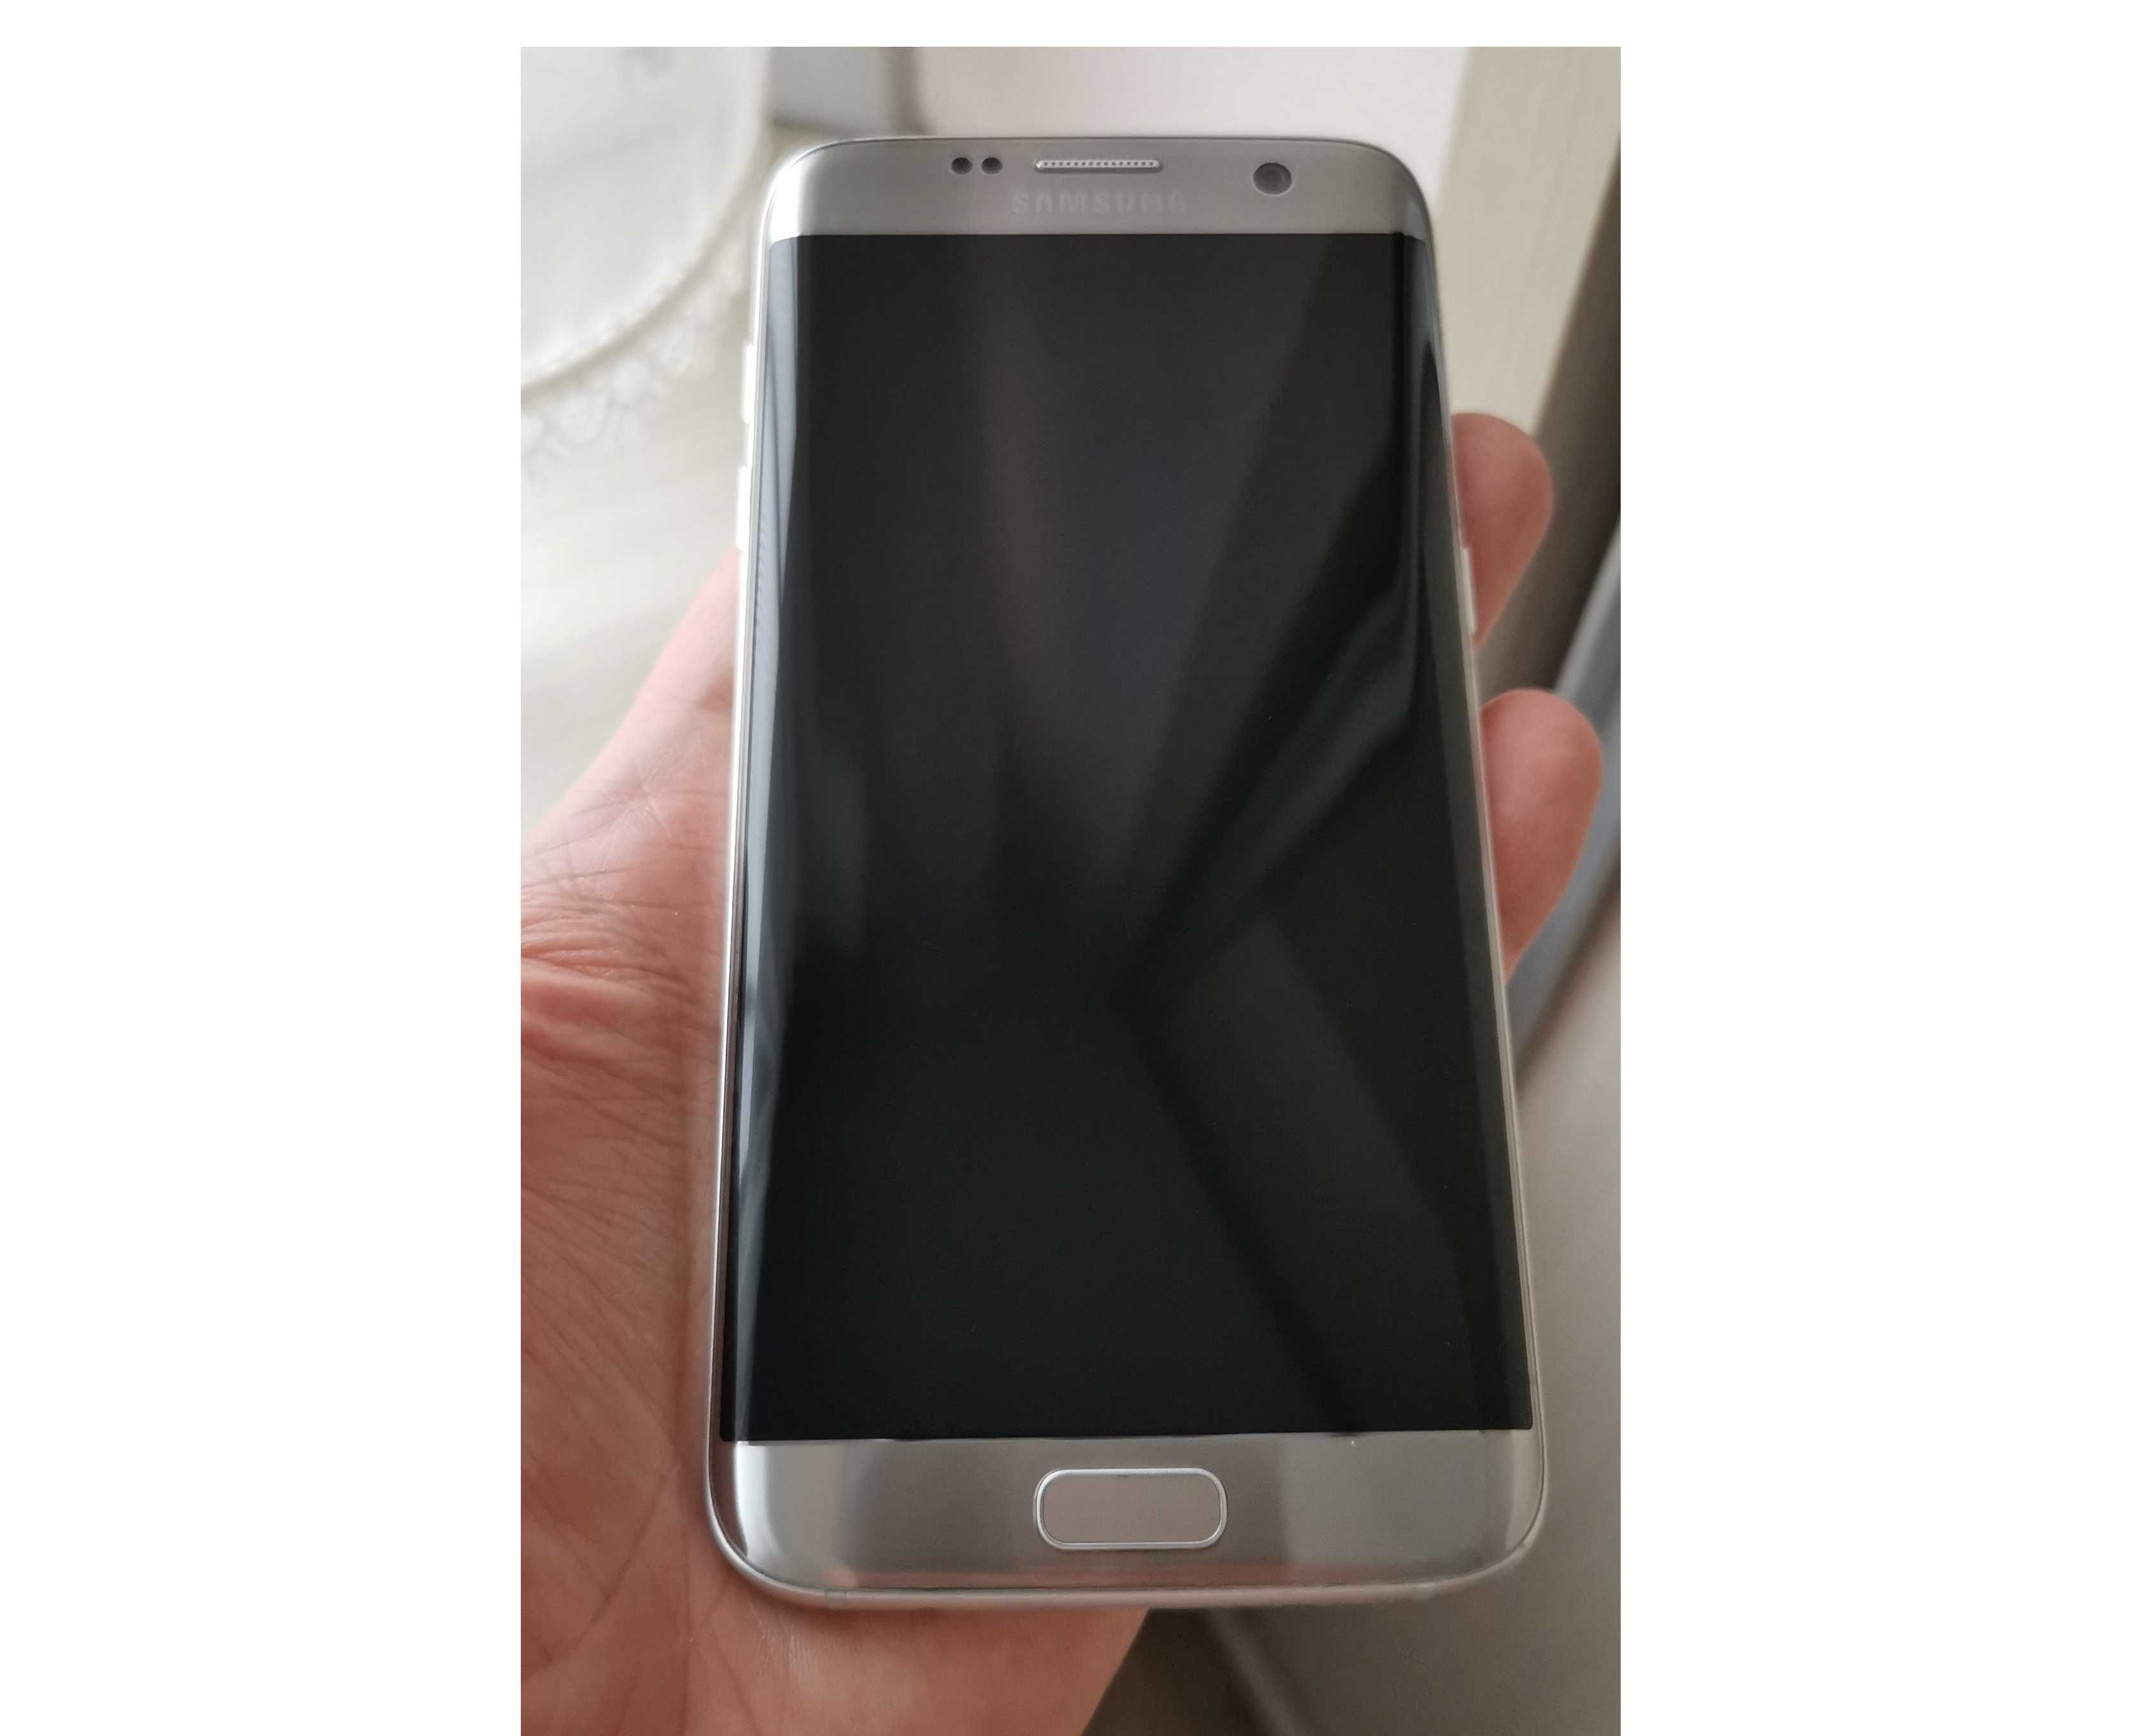 SAMSUNG Galaxy S7 EDGE DUOS DUAL SIM SM-G935FD 32GB komplet + gratisy